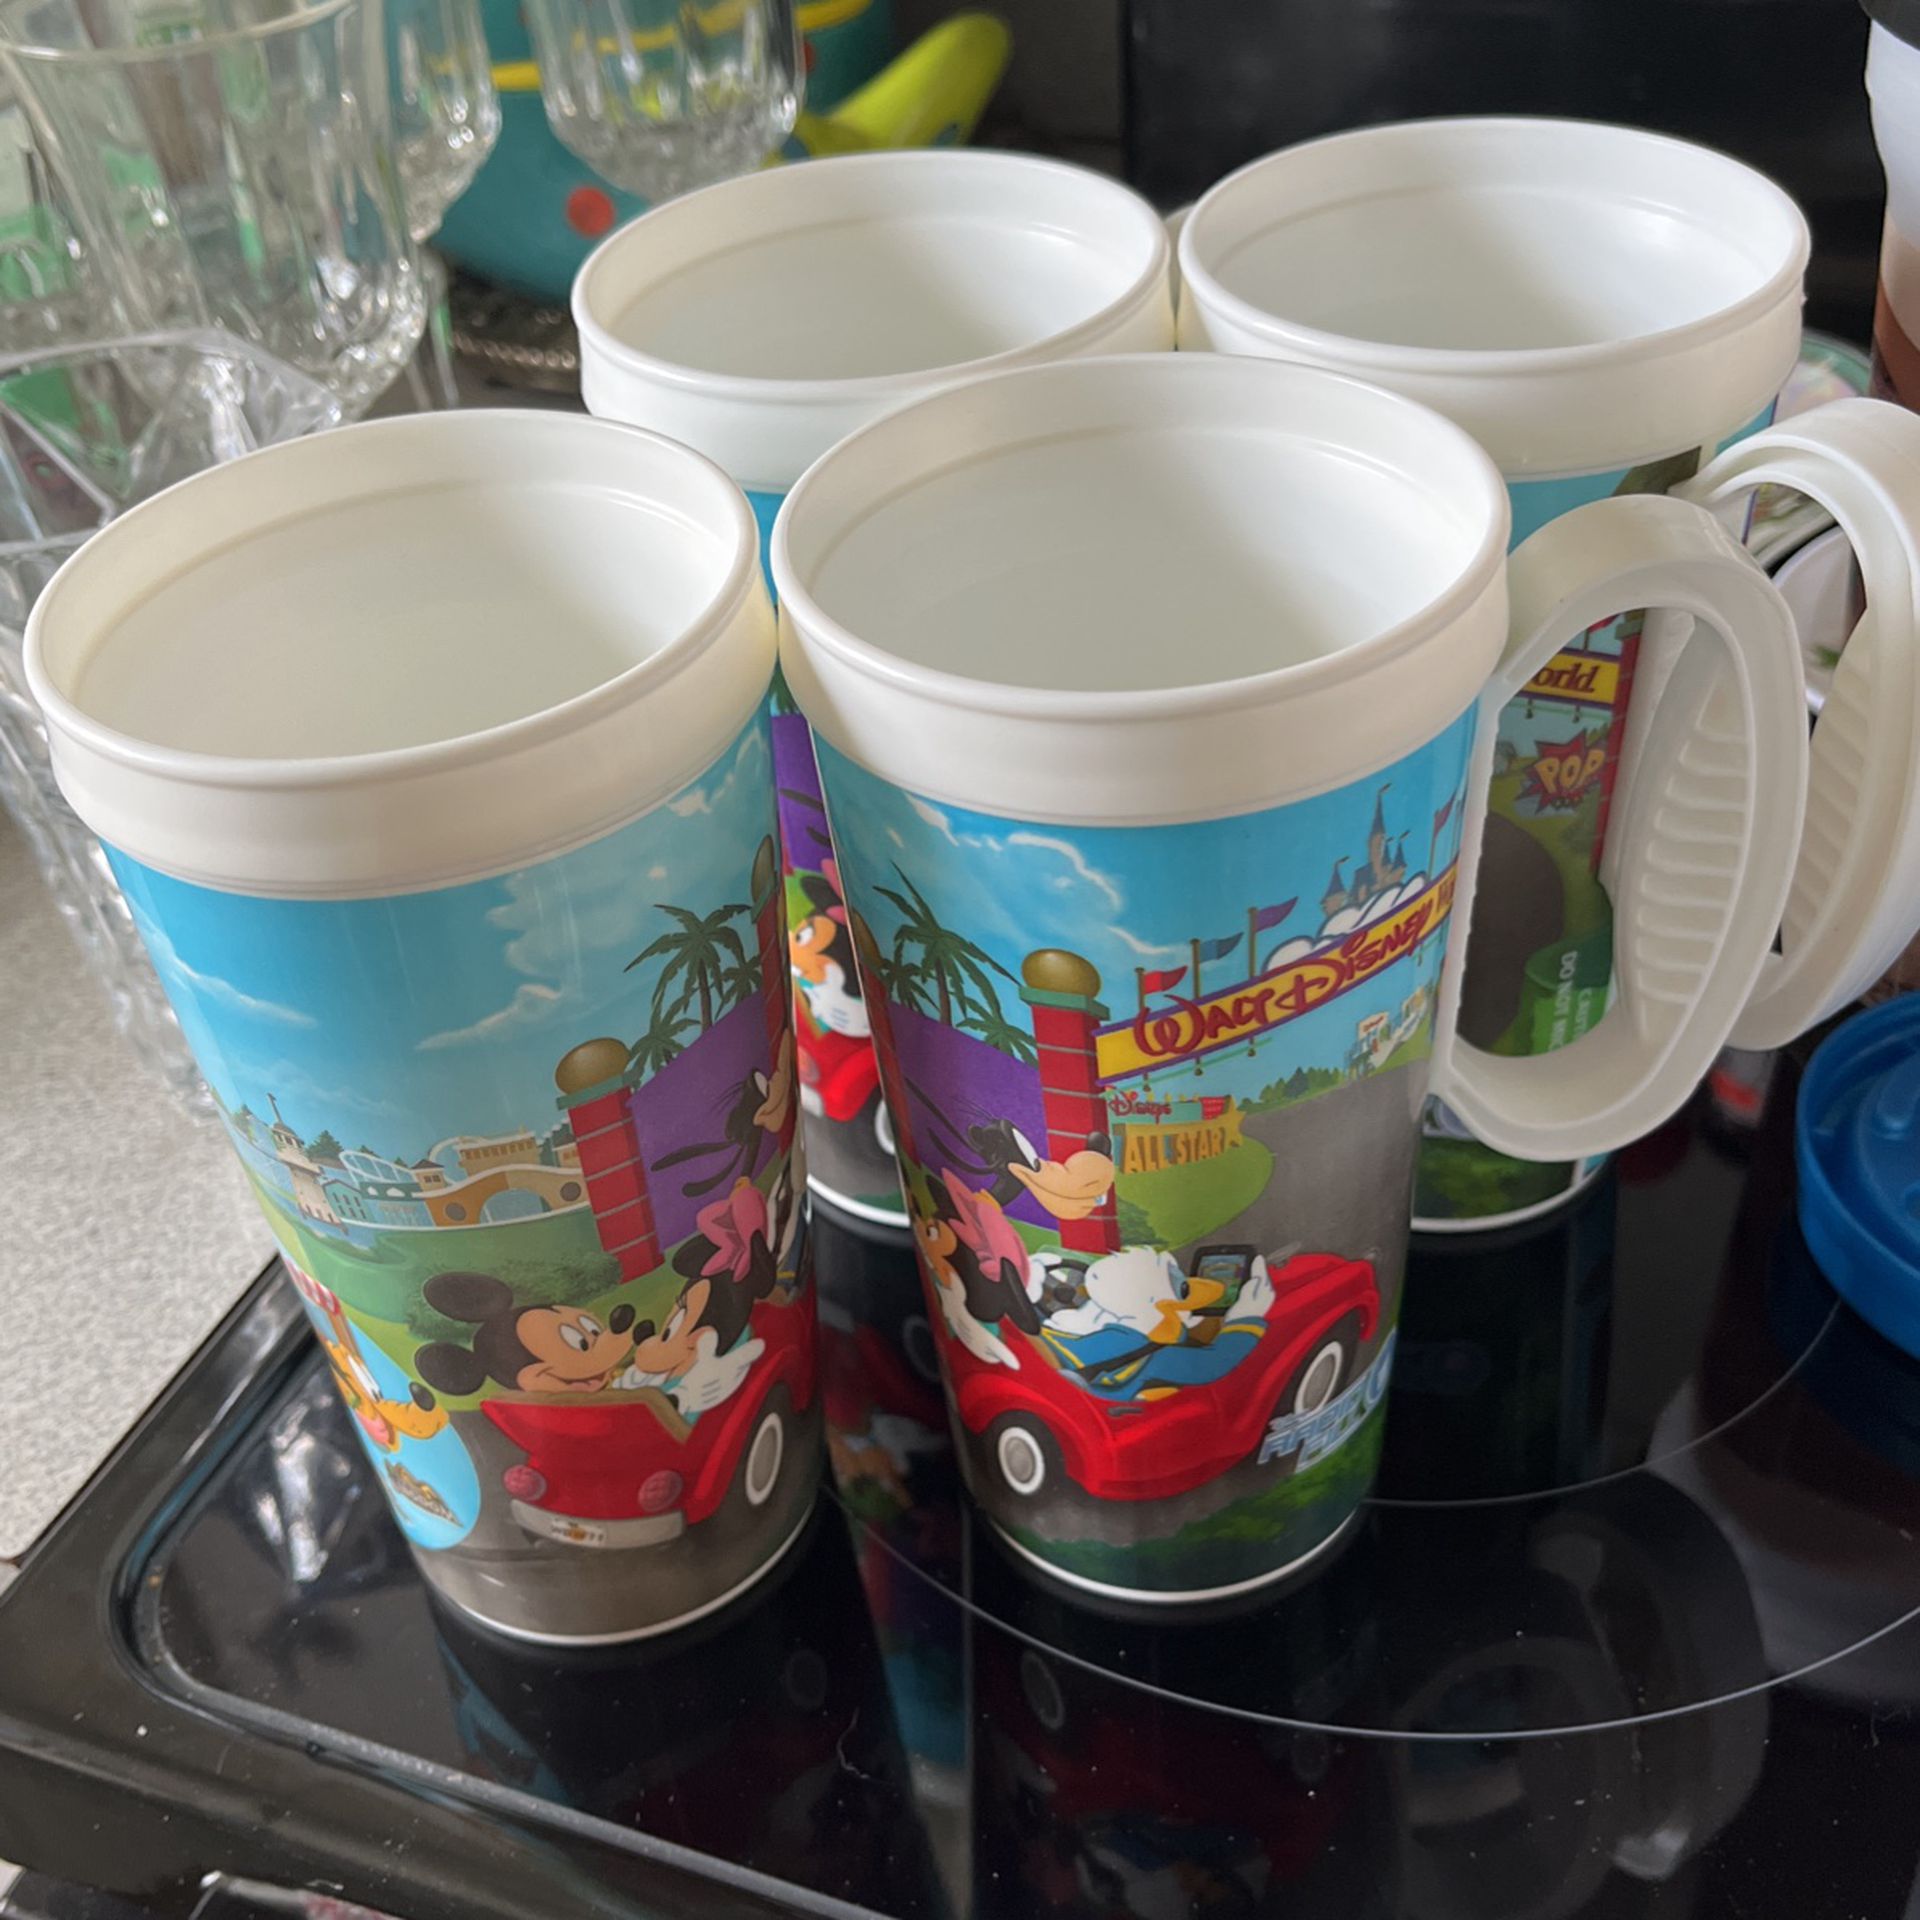   5Disney Cups